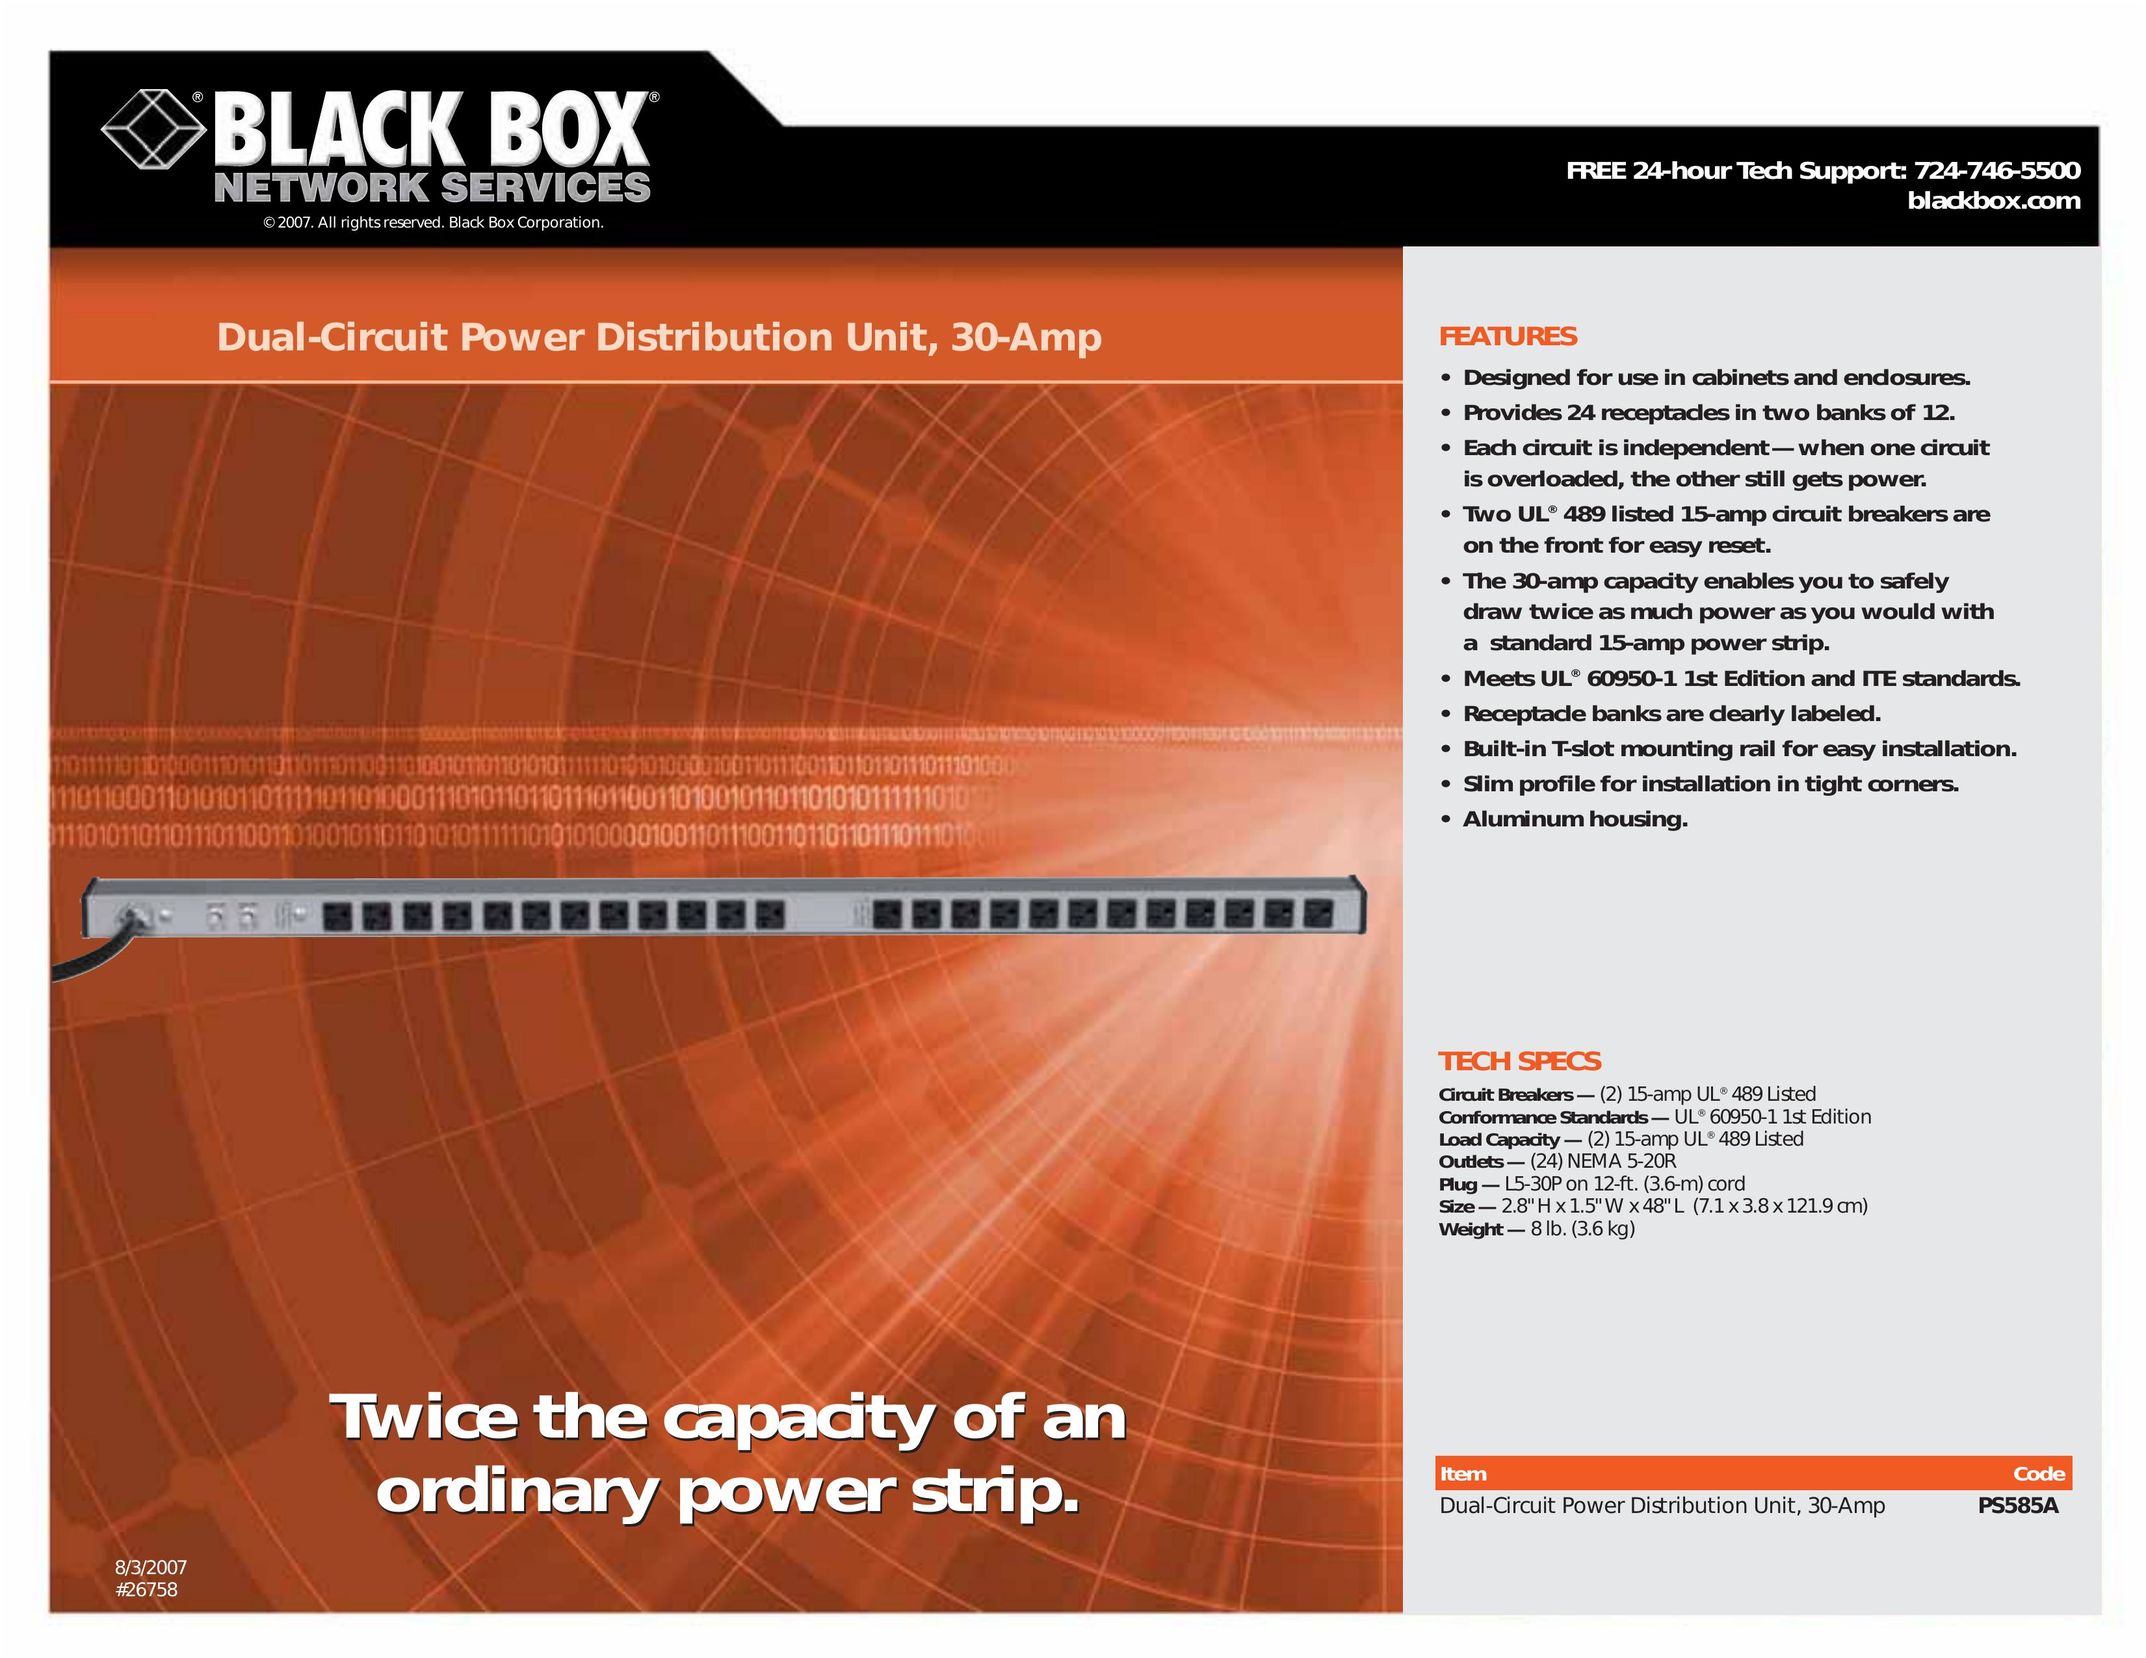 Black Box Dual-Circuit Power Distribution Unit Network Router User Manual